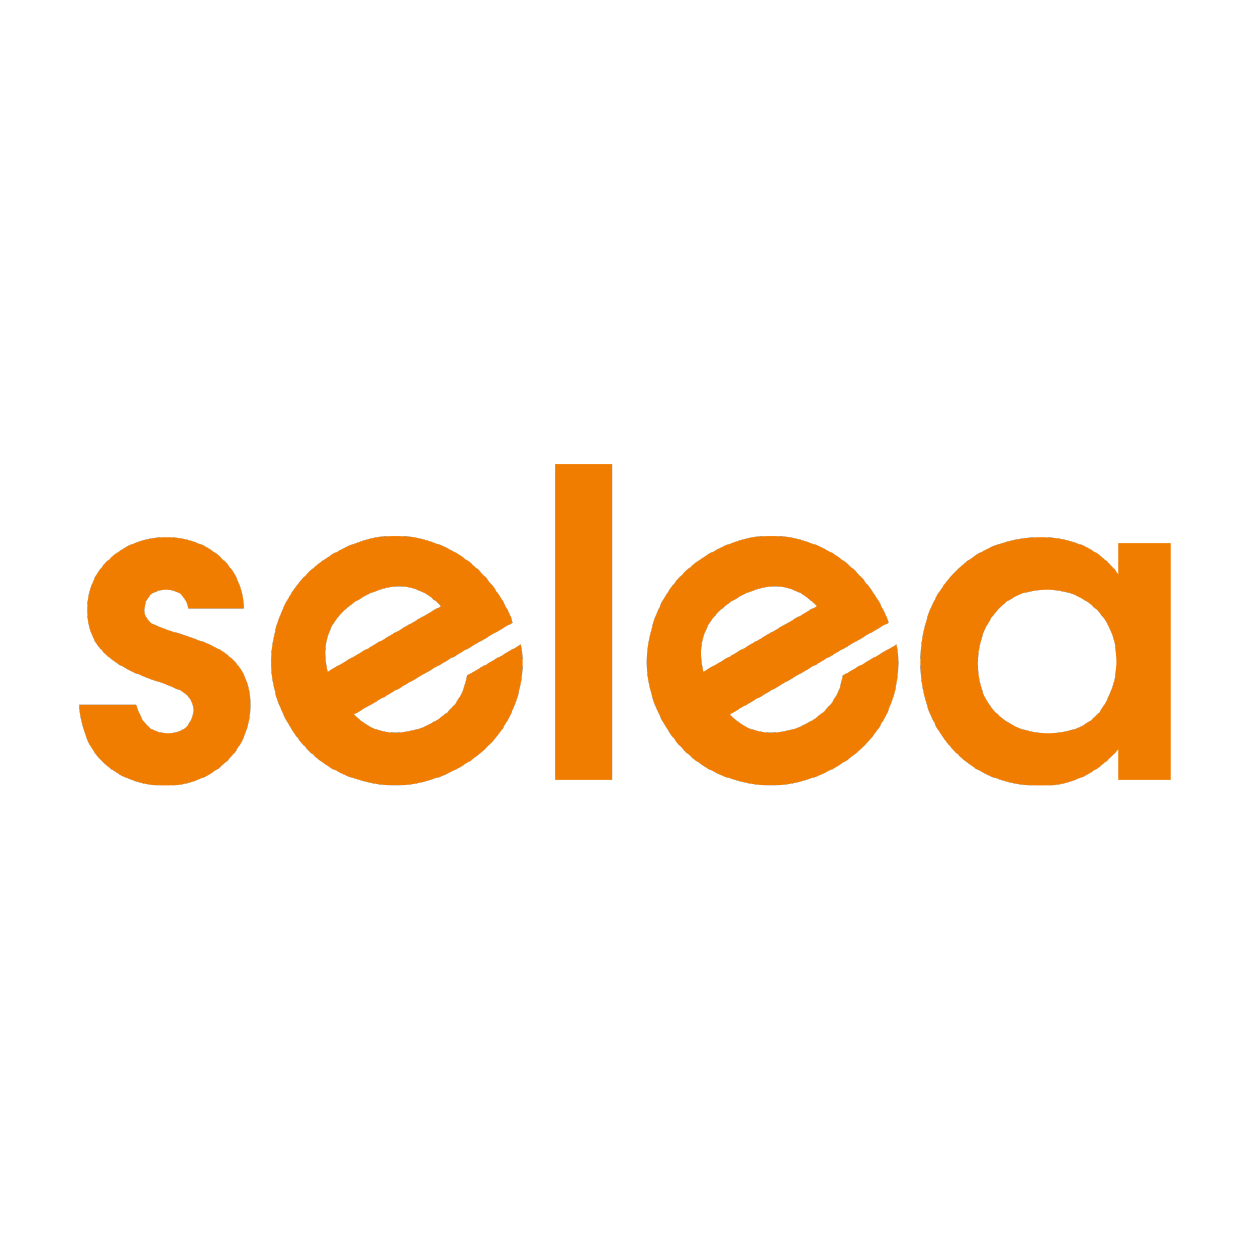 Selea profile on Qualified.One